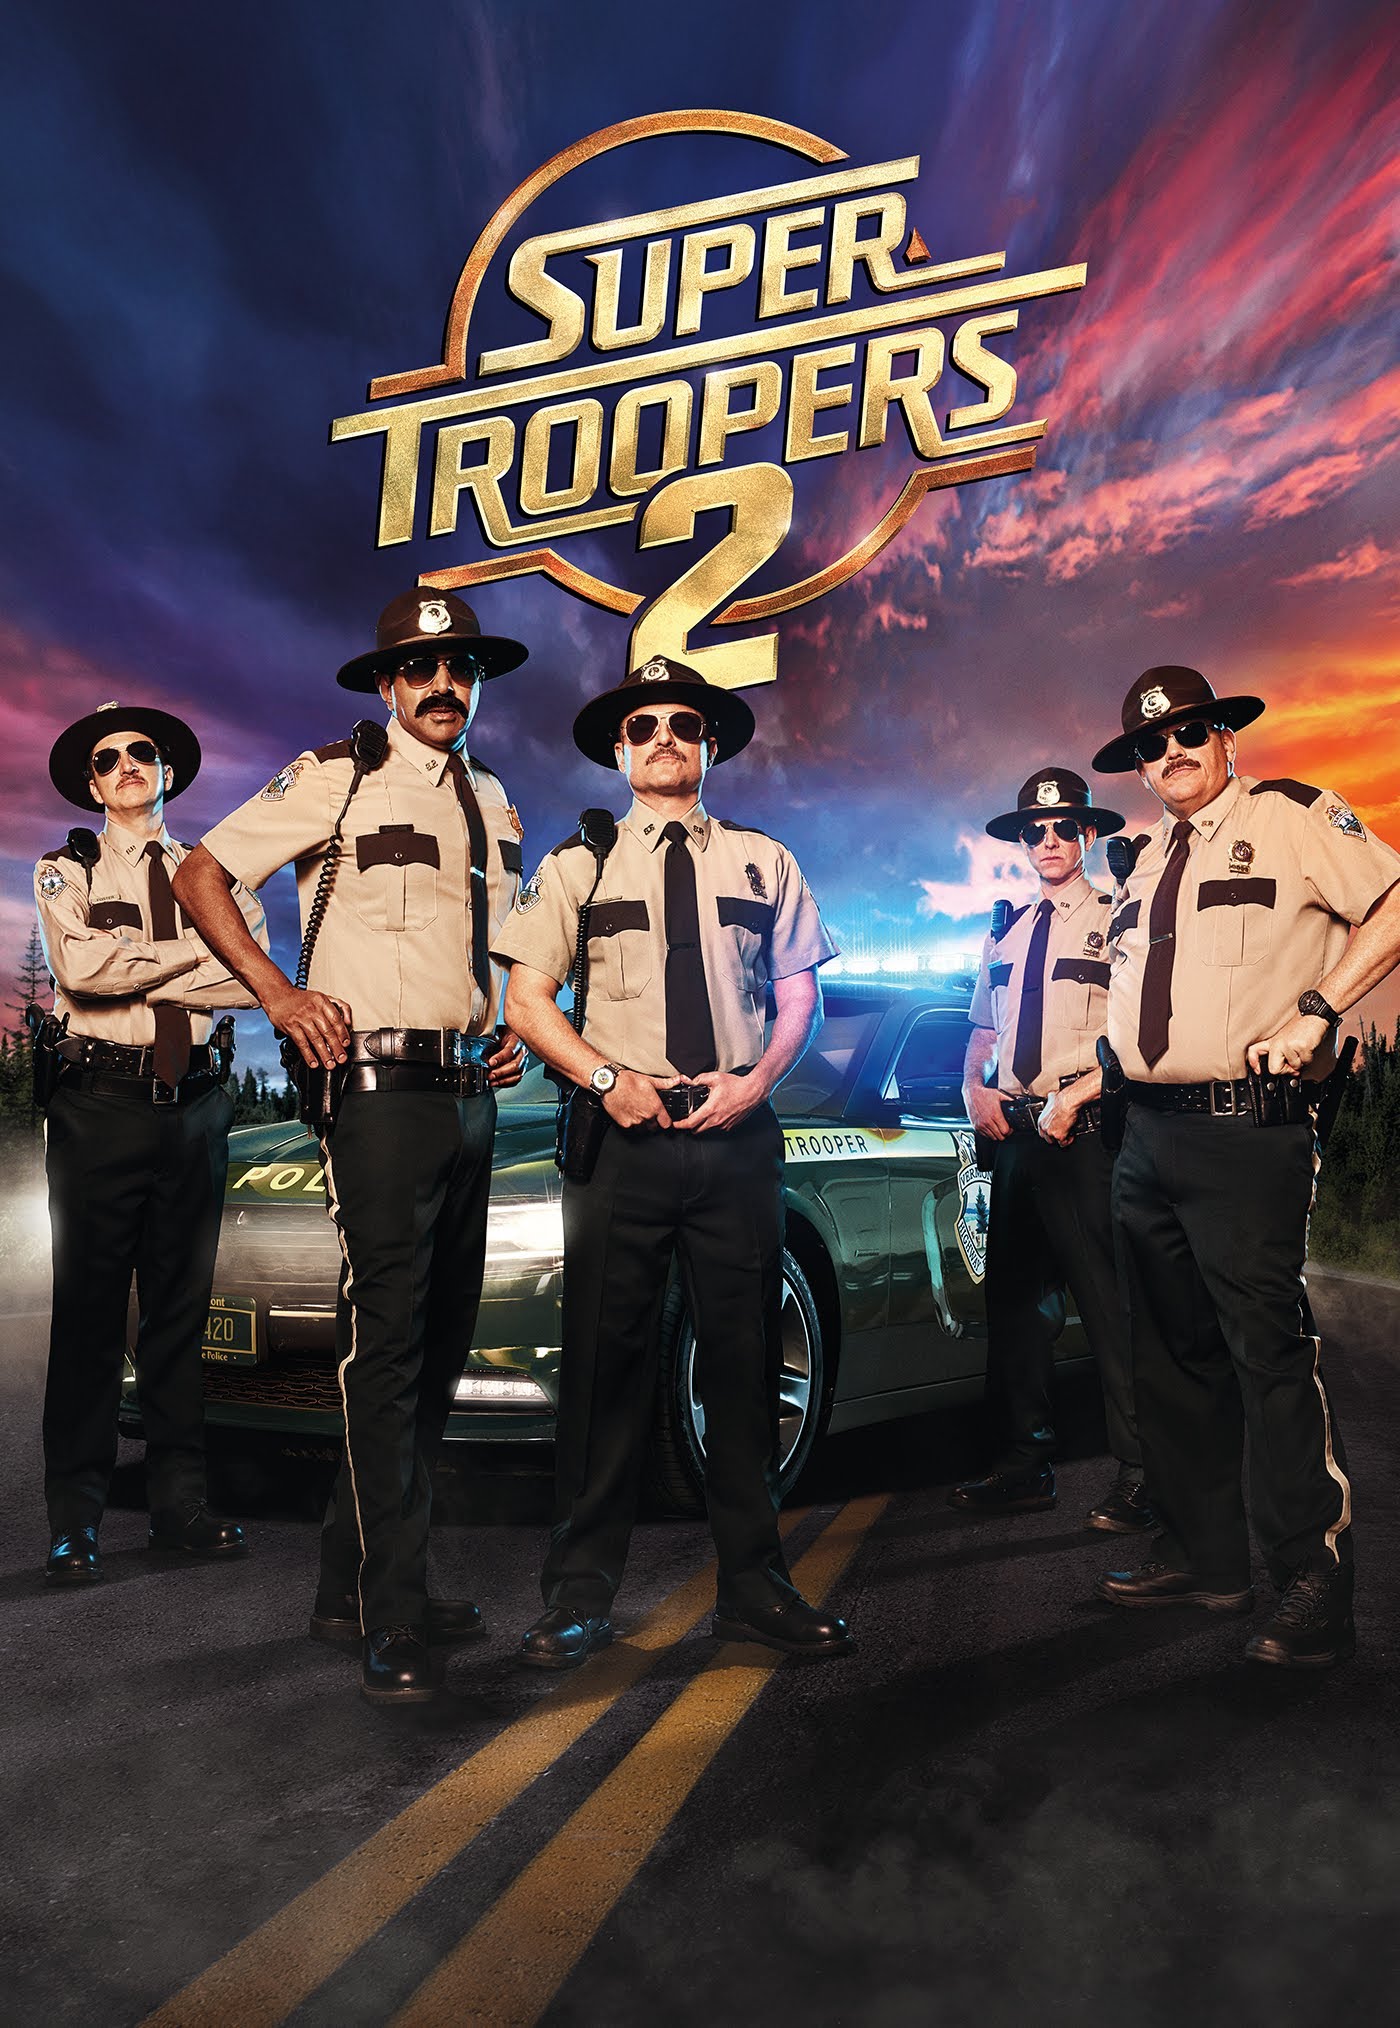 Super Troopers 2 [HD] (2018)